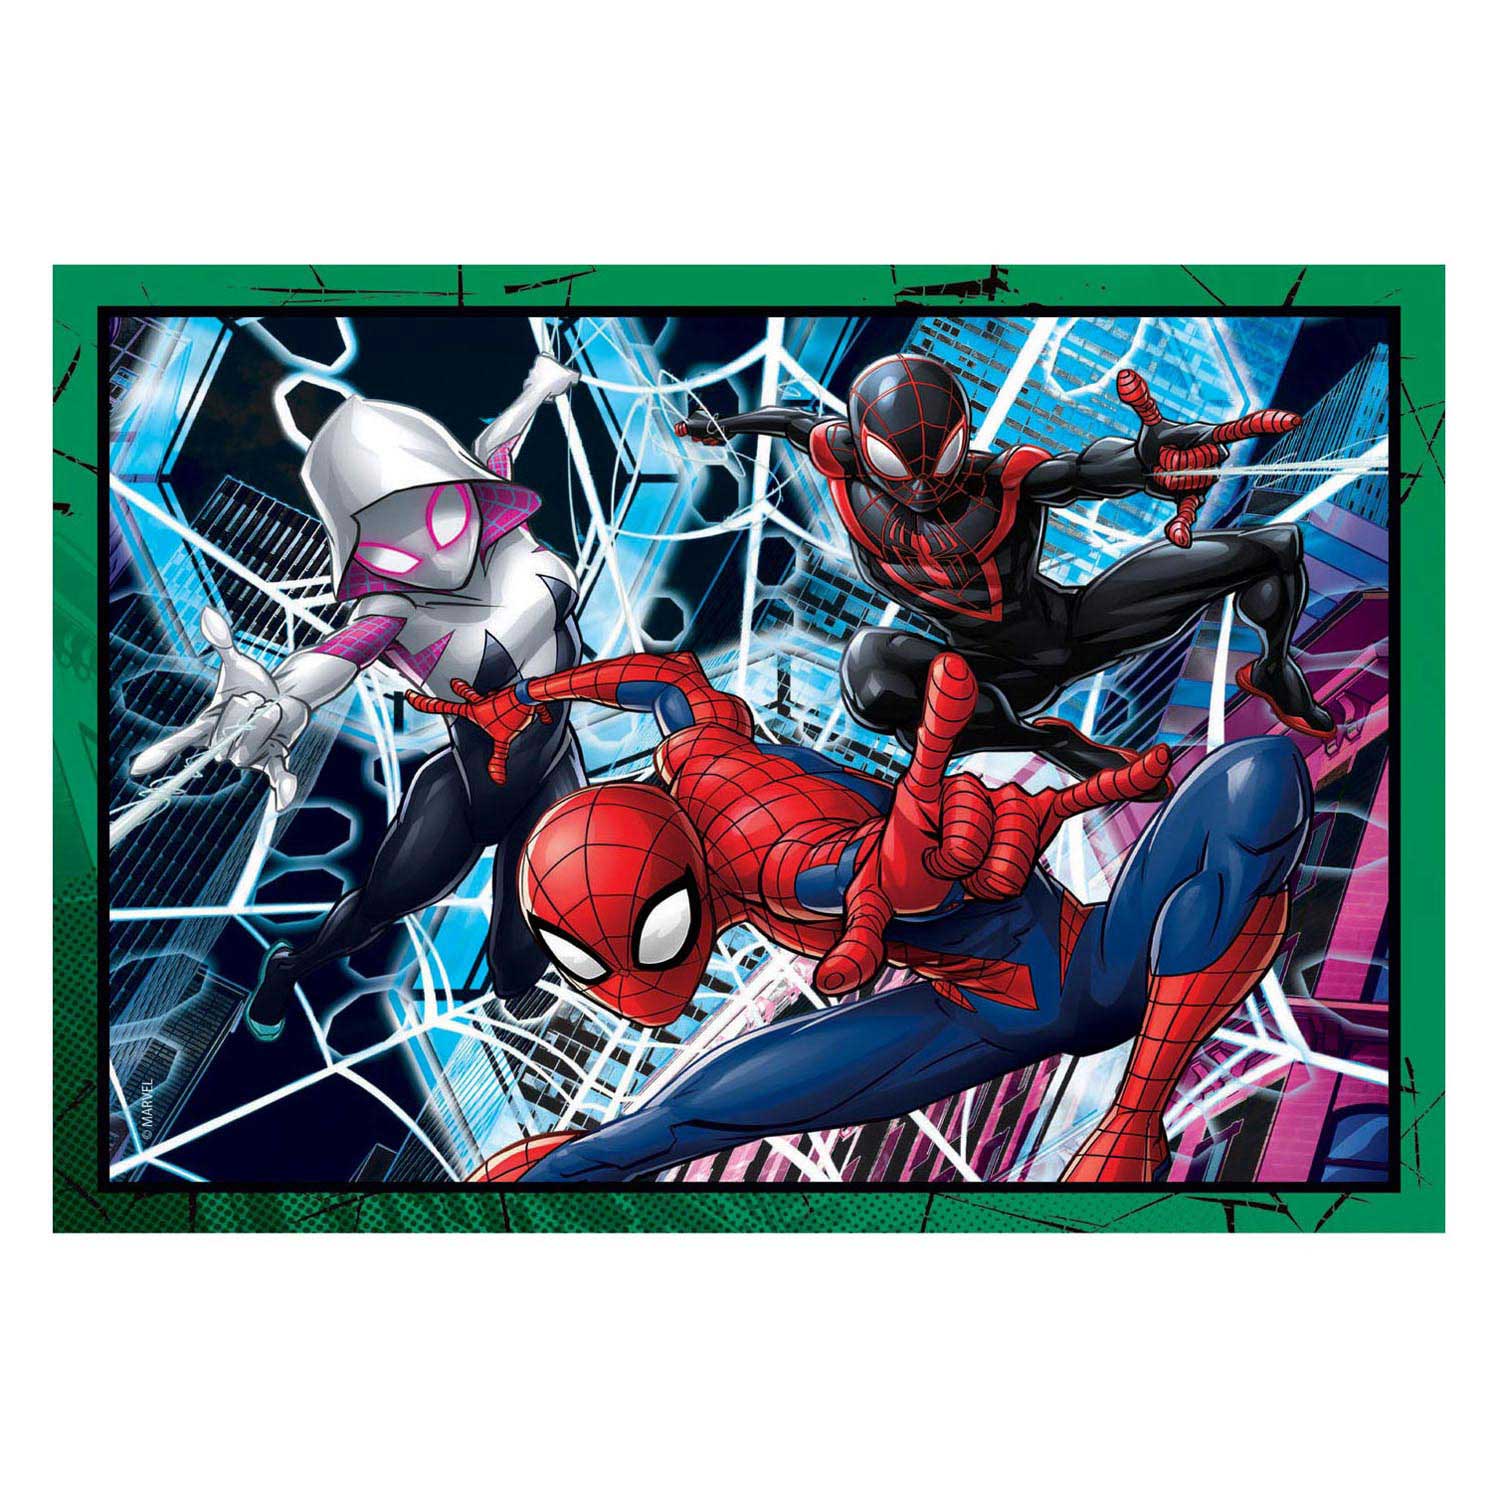 Clementoni Puzzles Marvel Spiderman, 4in1